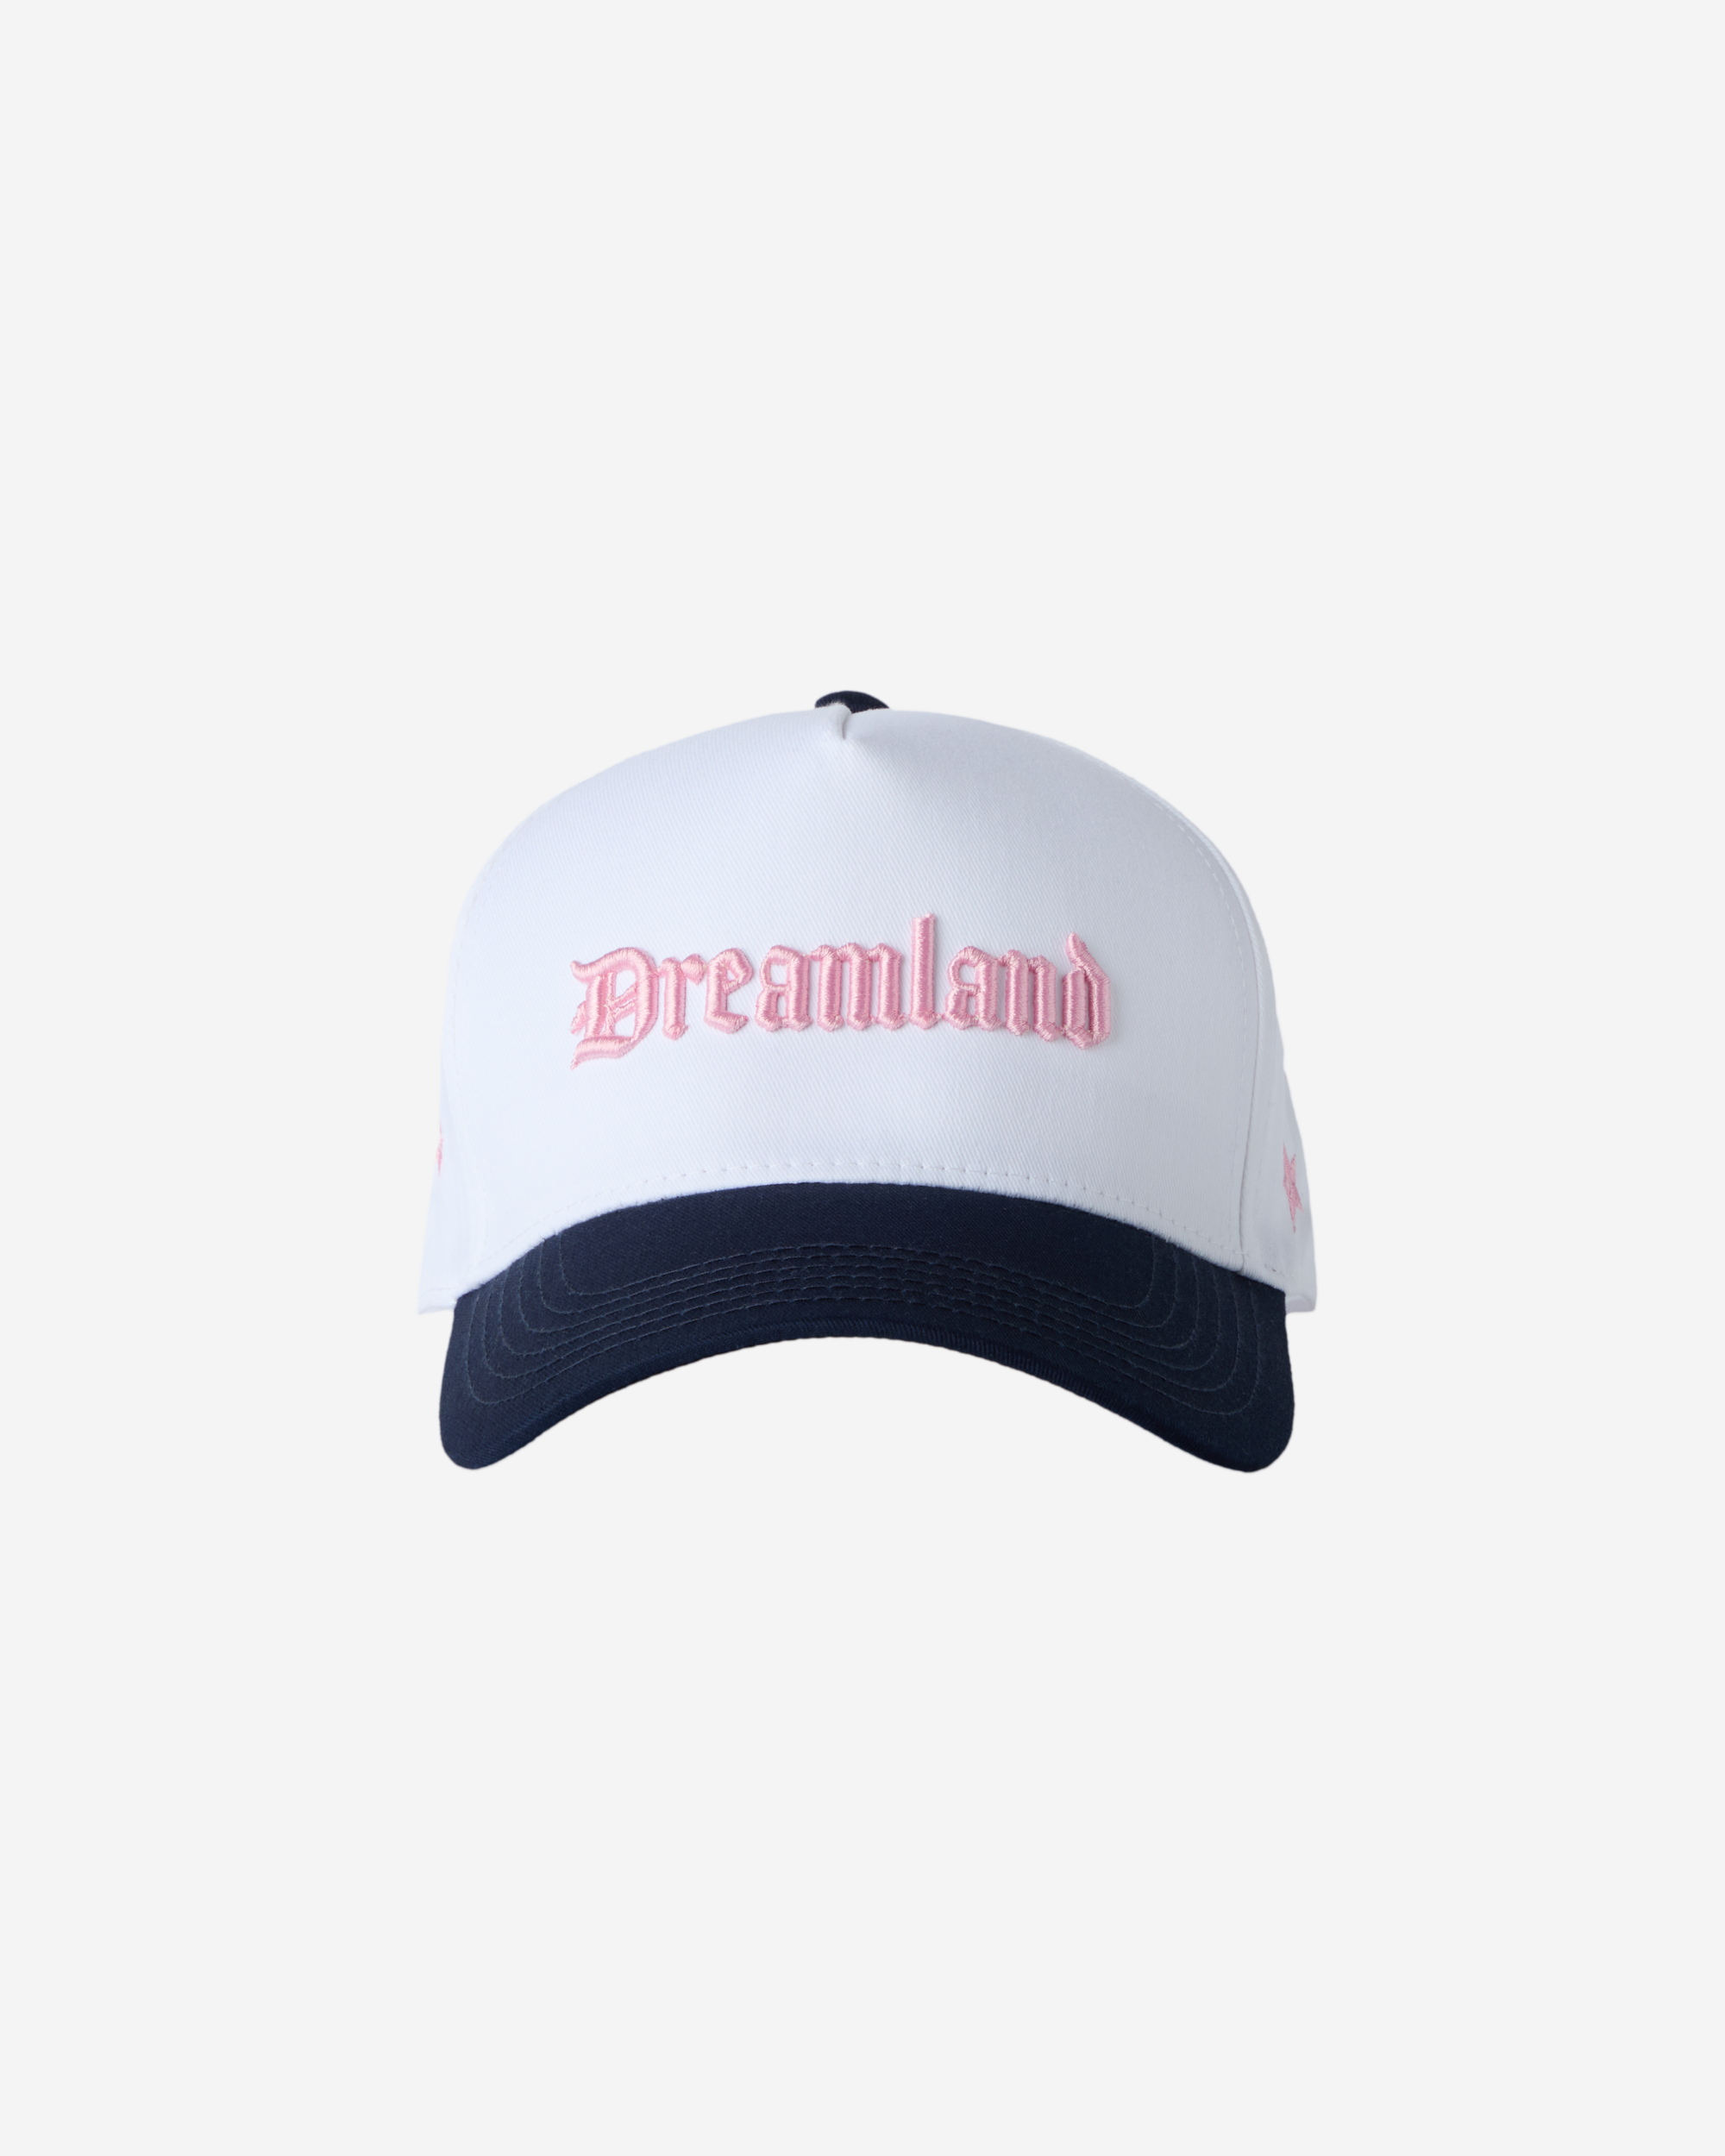 Dreamland Hat